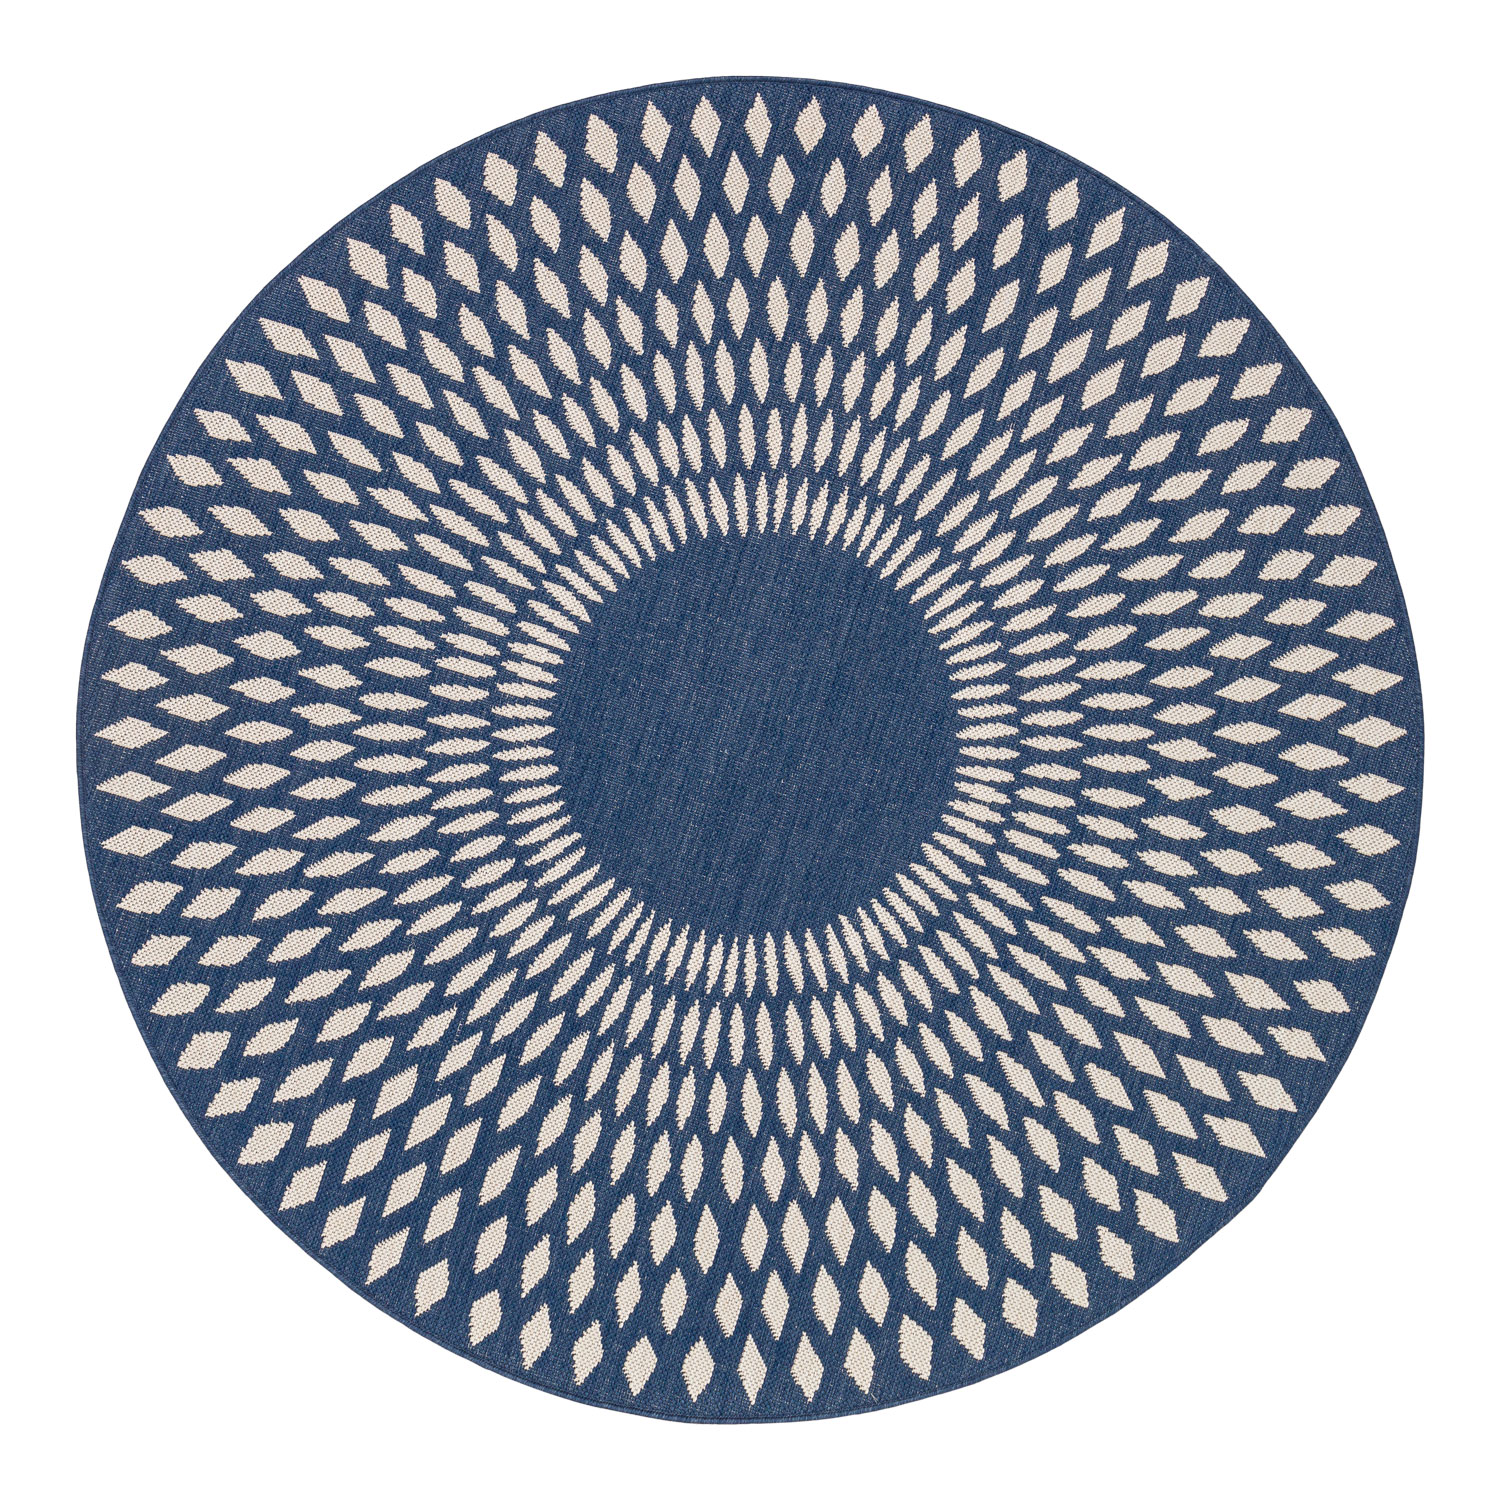 Tapis rond illusion bleu nuit 160x160